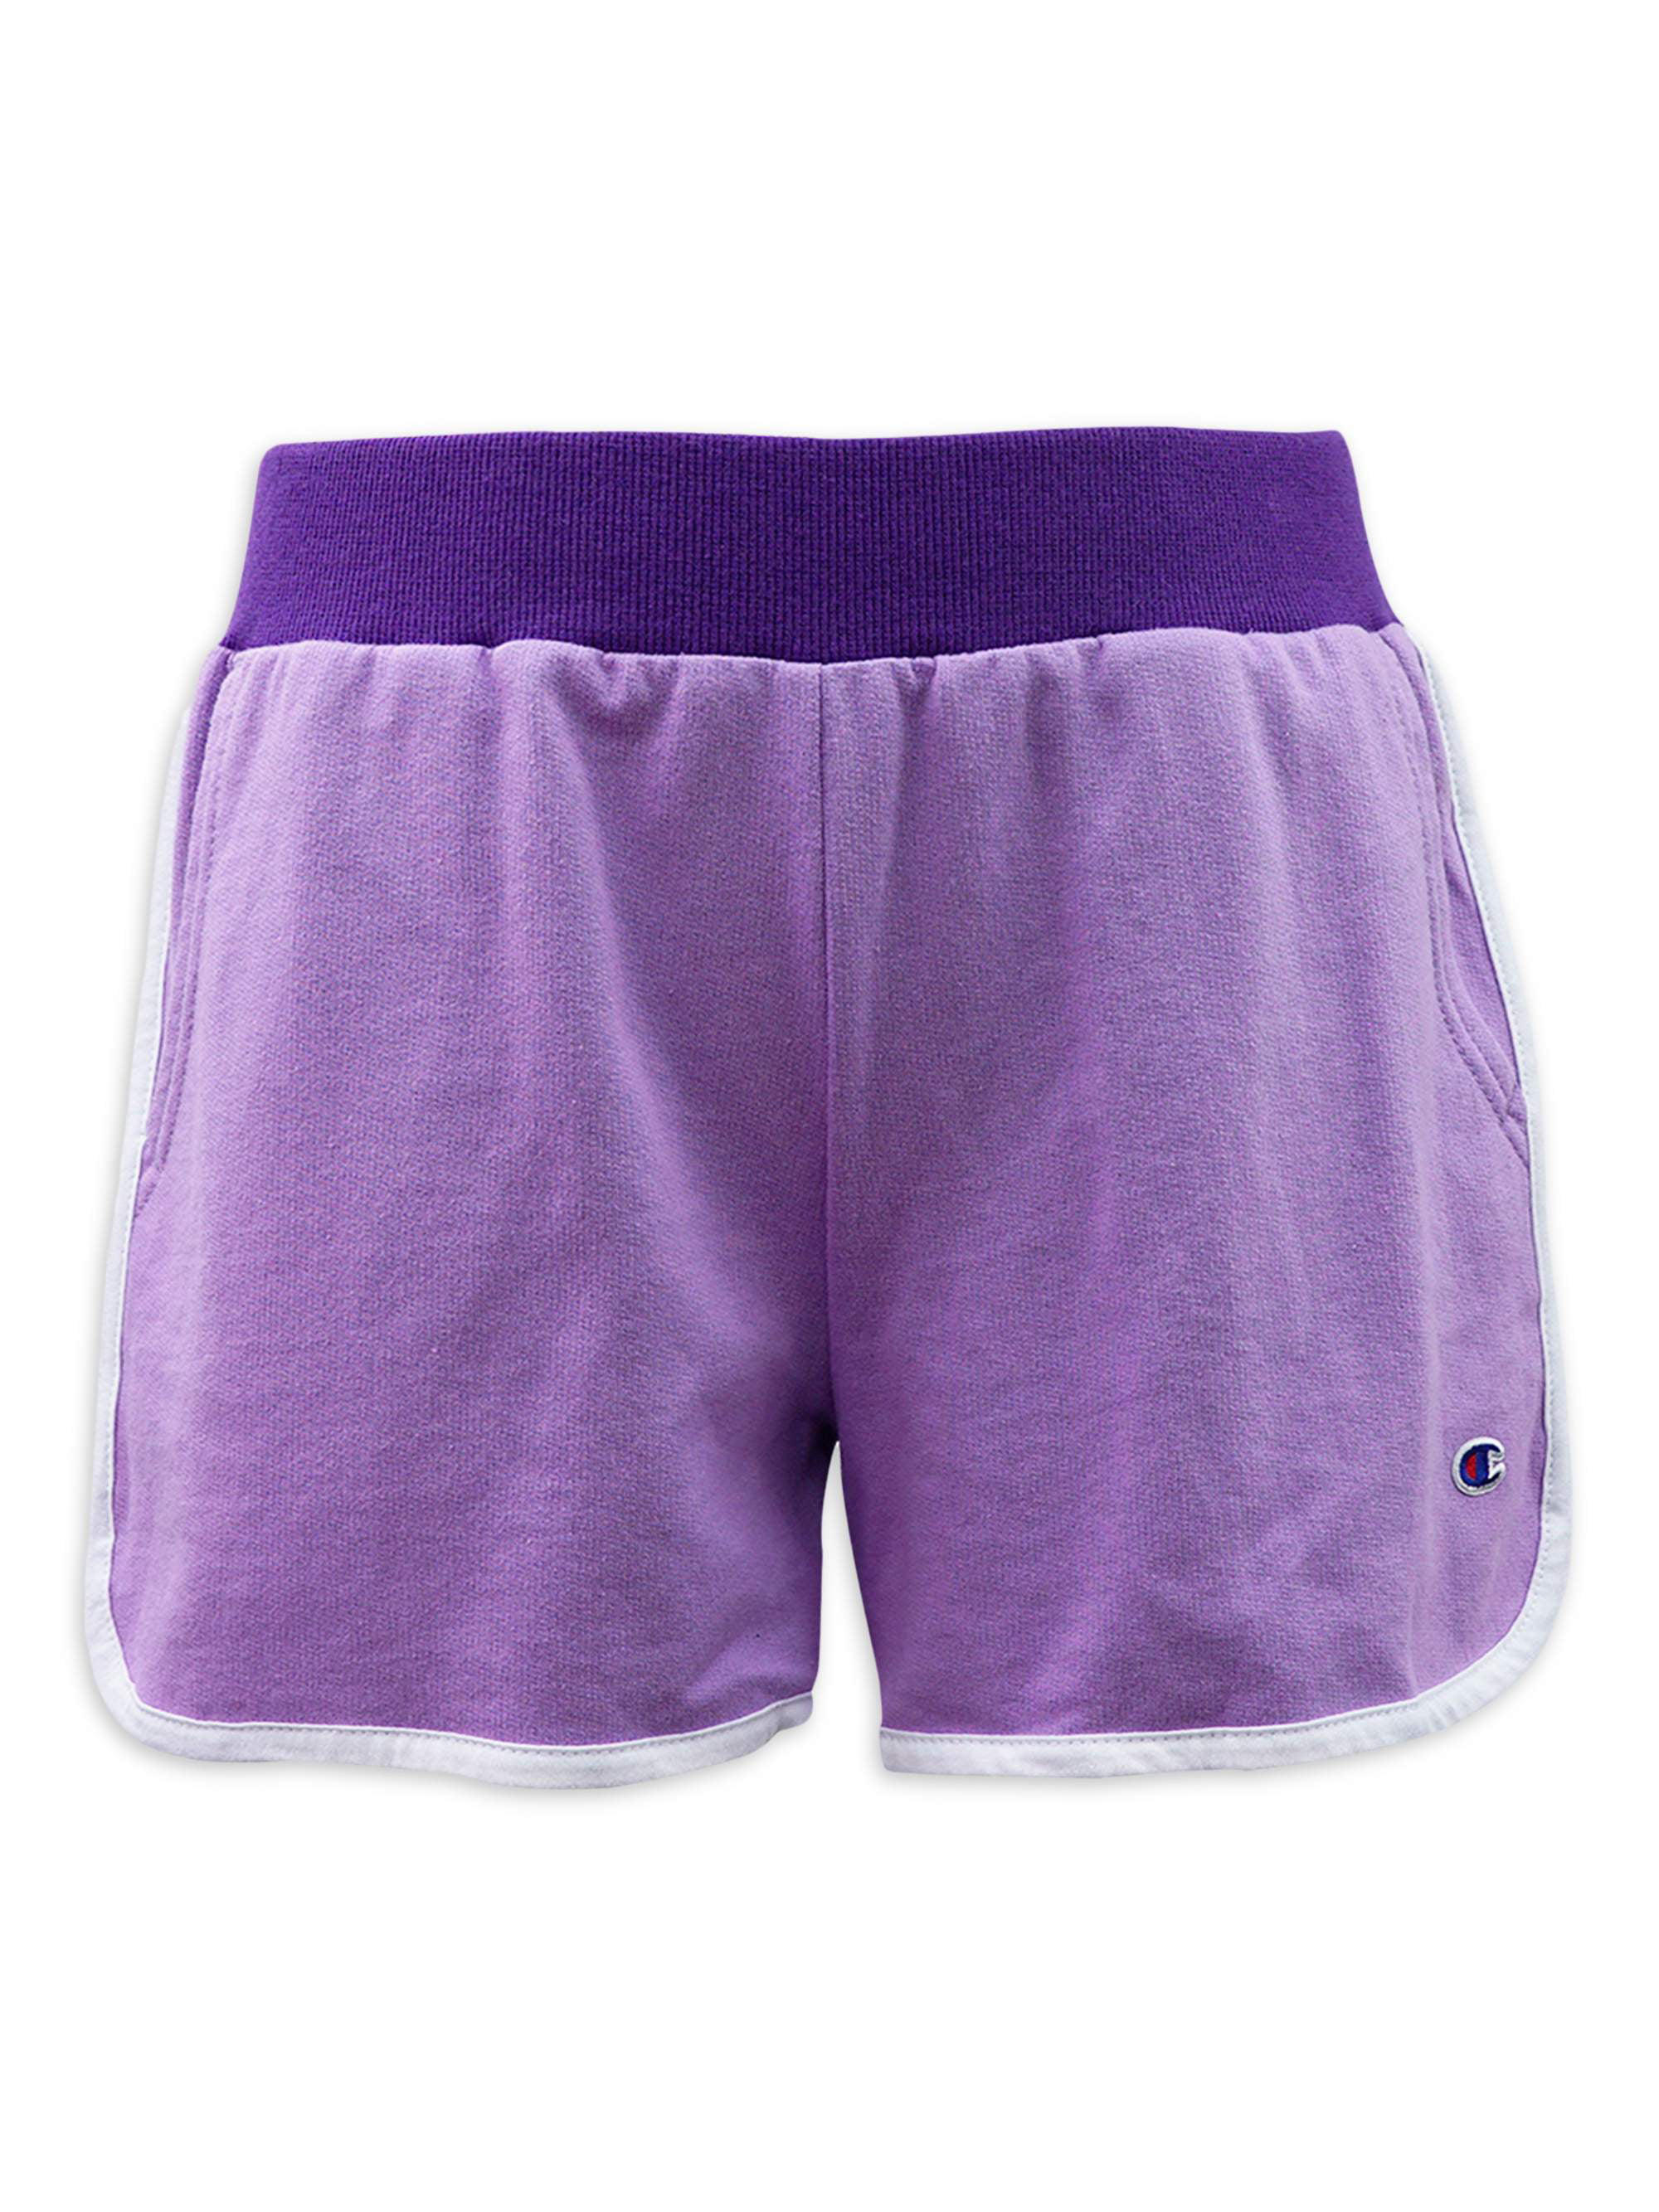 NWT athletic french shorts pink stripe GIRLS size 18 